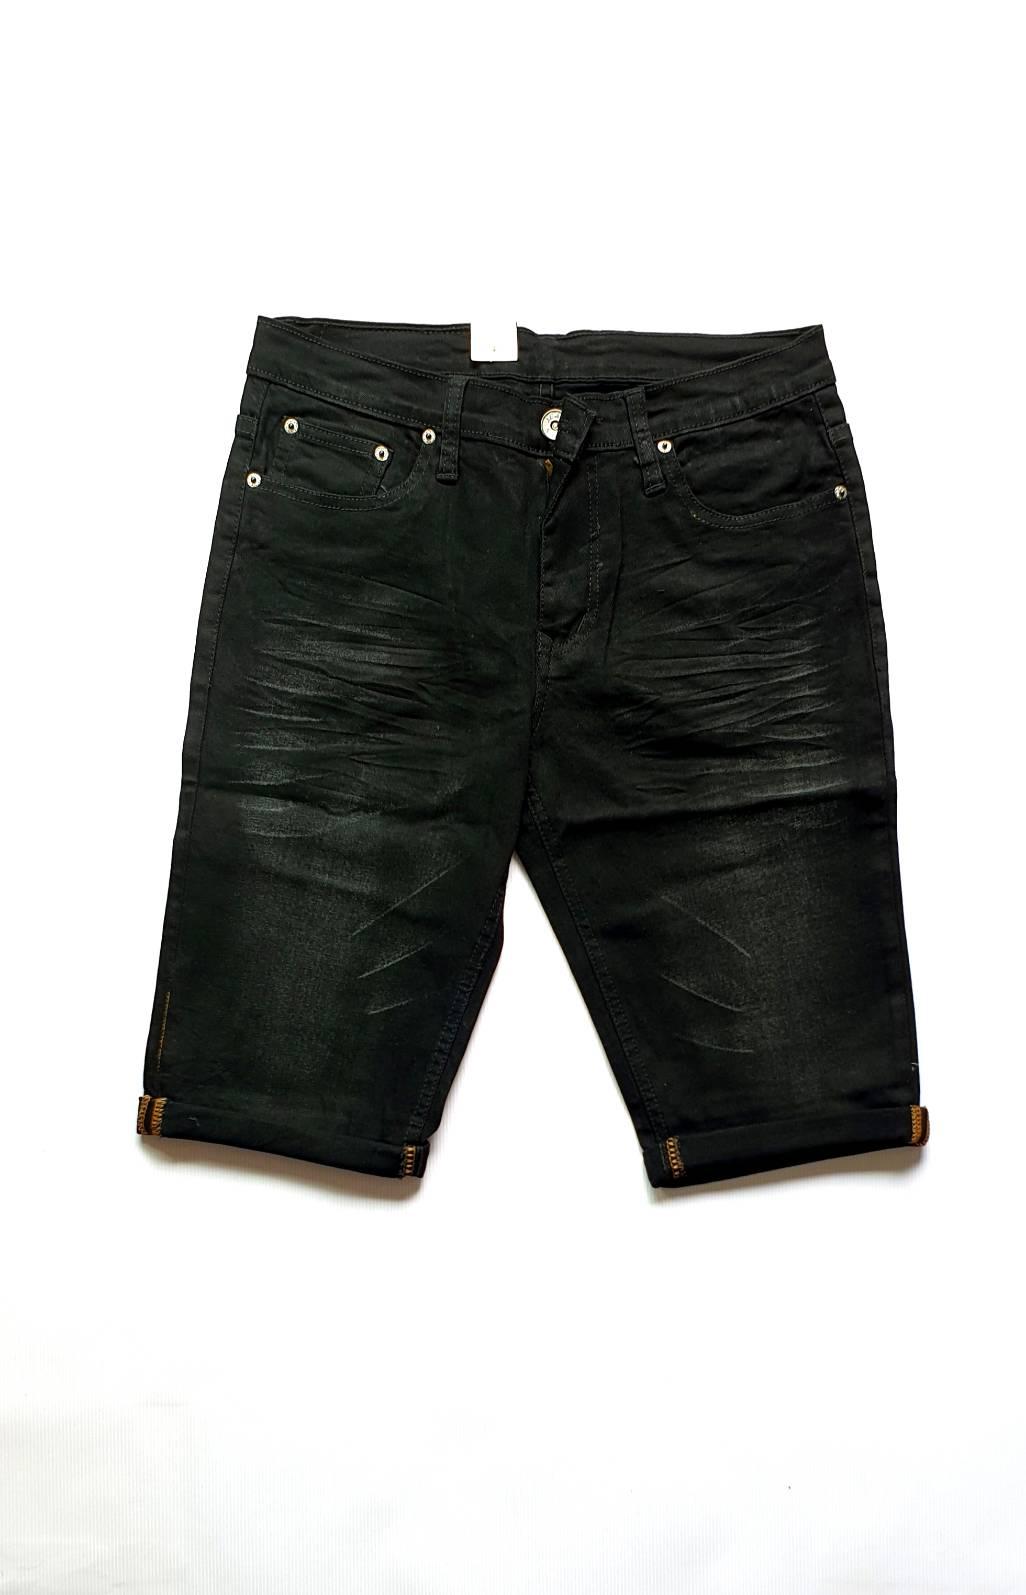 jeans กางเกงยีนส์ผู้ชาย กางเกงยีนส์ขาสั้น เดฟผ้ายืด สีดำ Size 28-36 R296...